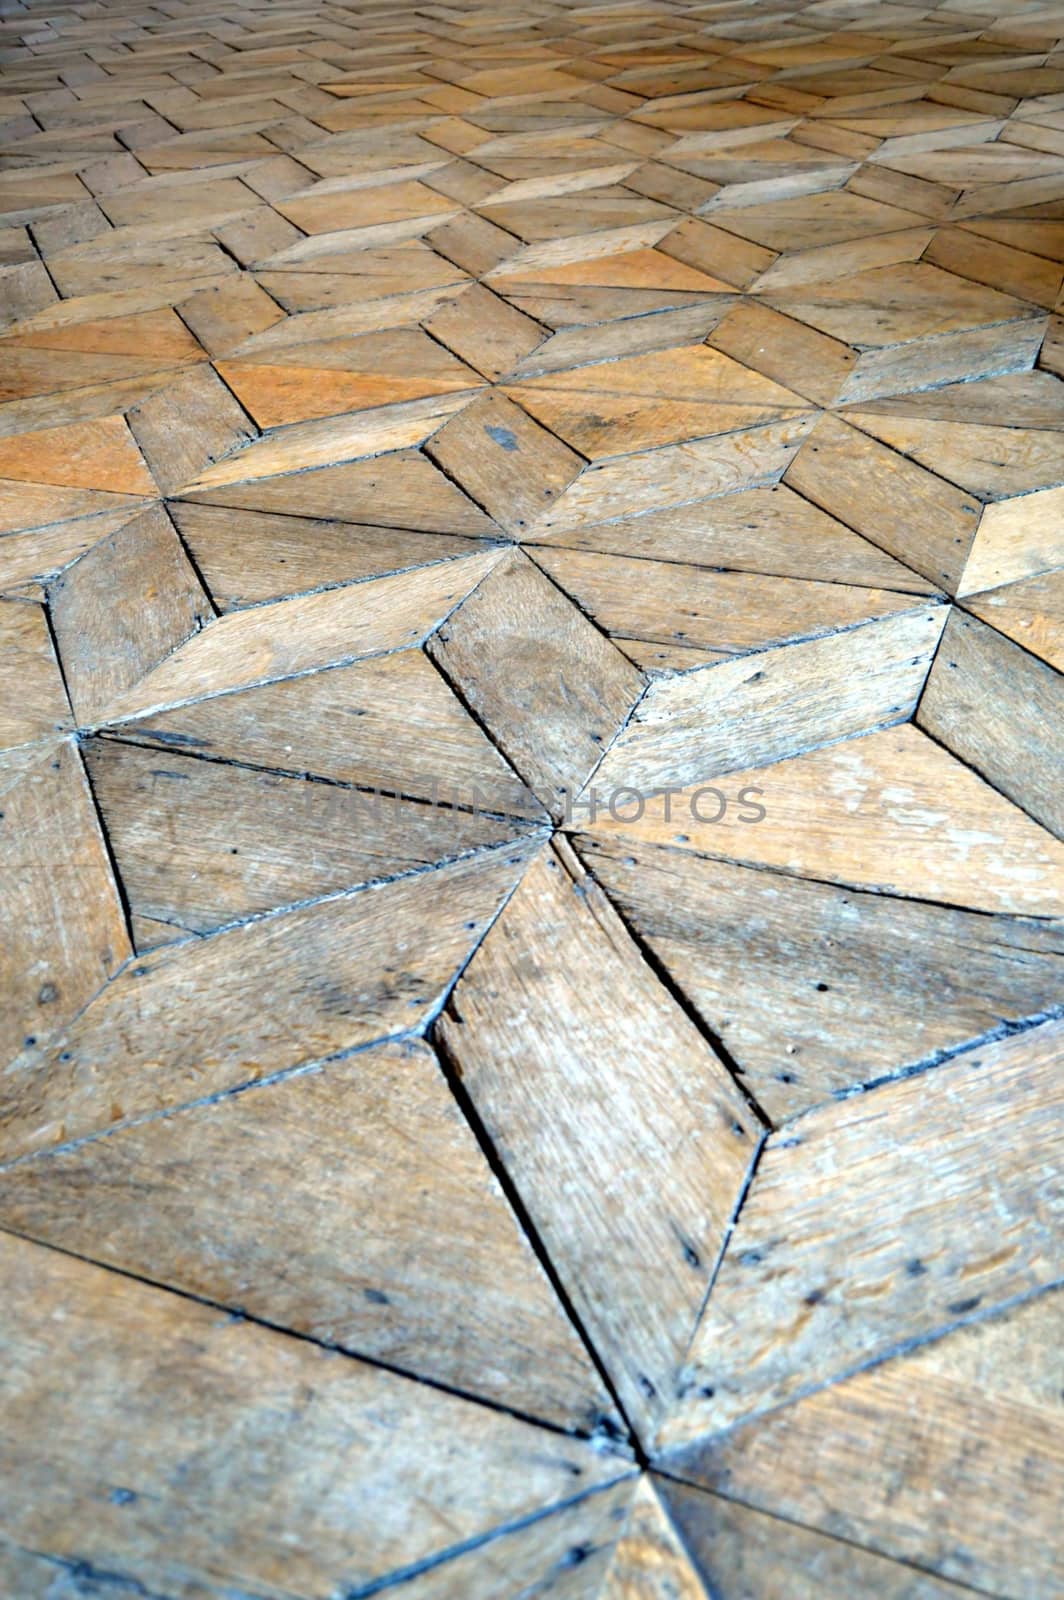 Oak floor with diamond- by Philou1000